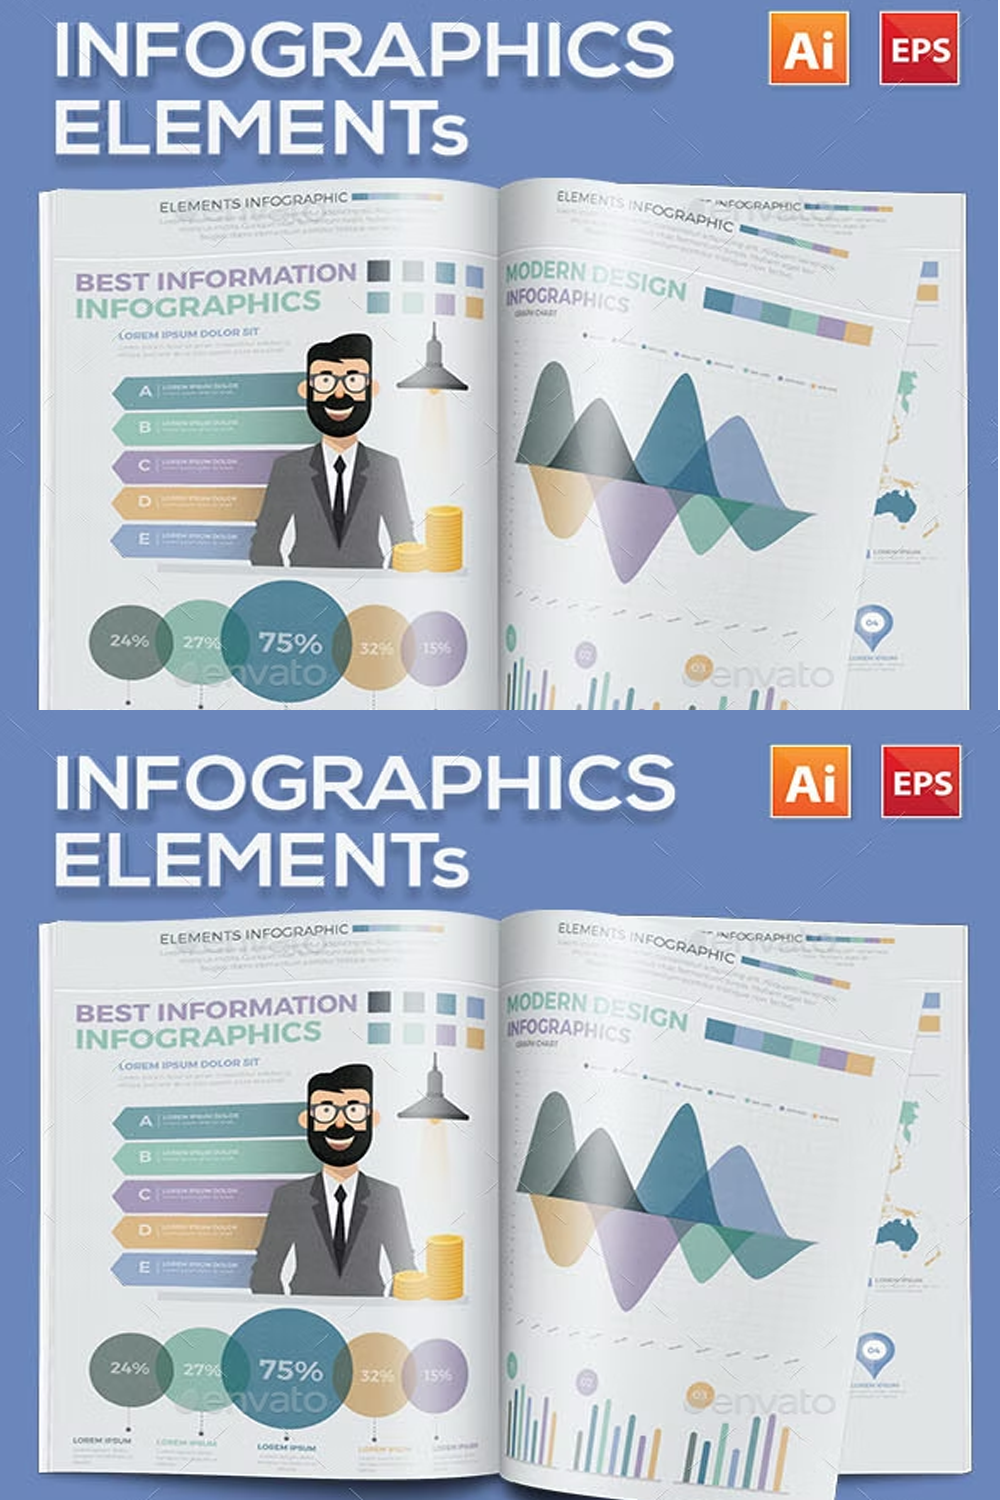 Illustrations infographic elements of pinterest.